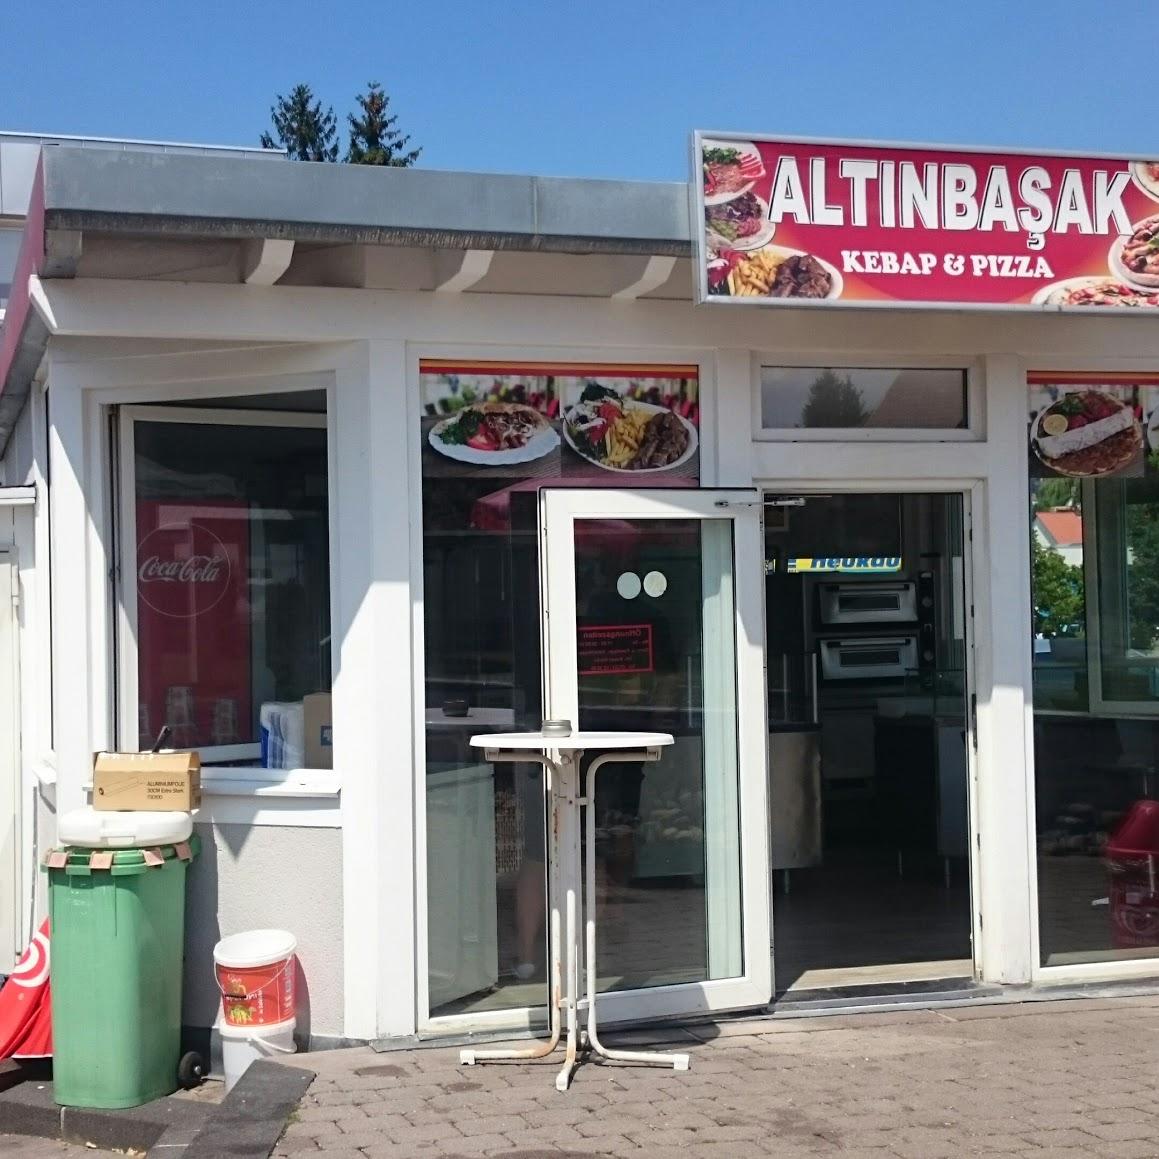 Restaurant "Altinbasak Kebap" in Laichingen